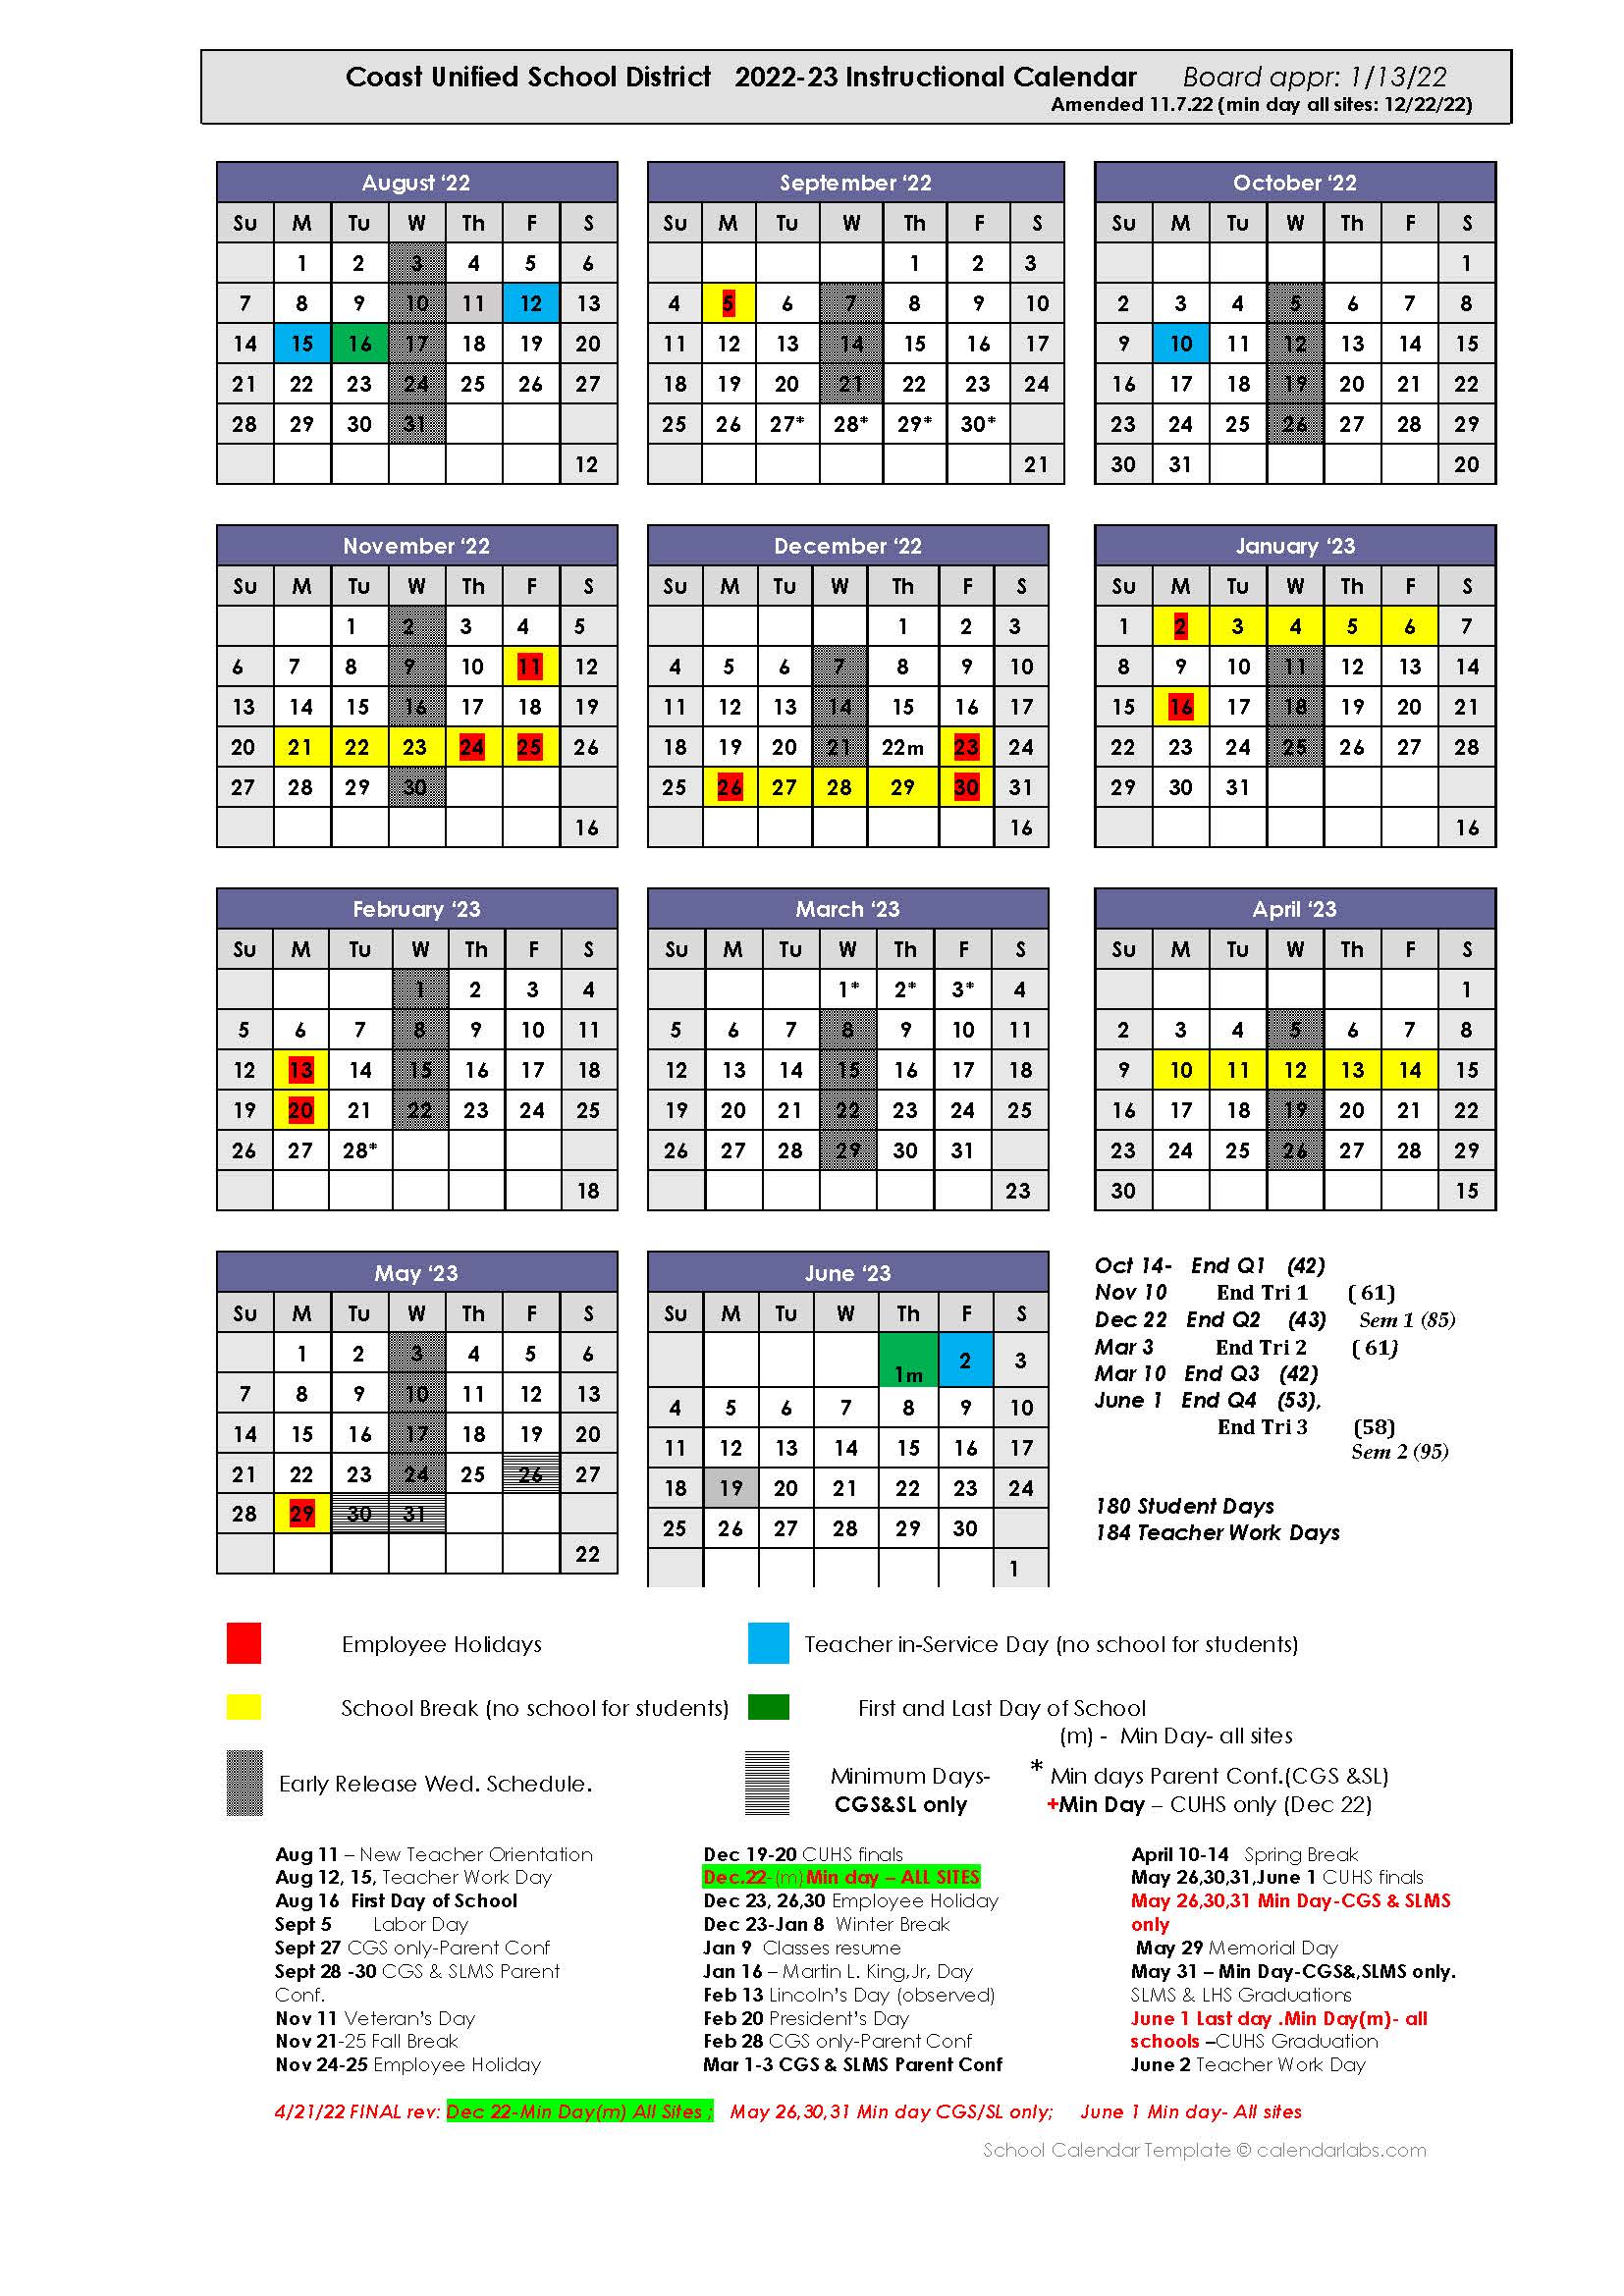 Coast Unified School District Calendar 2023 2024